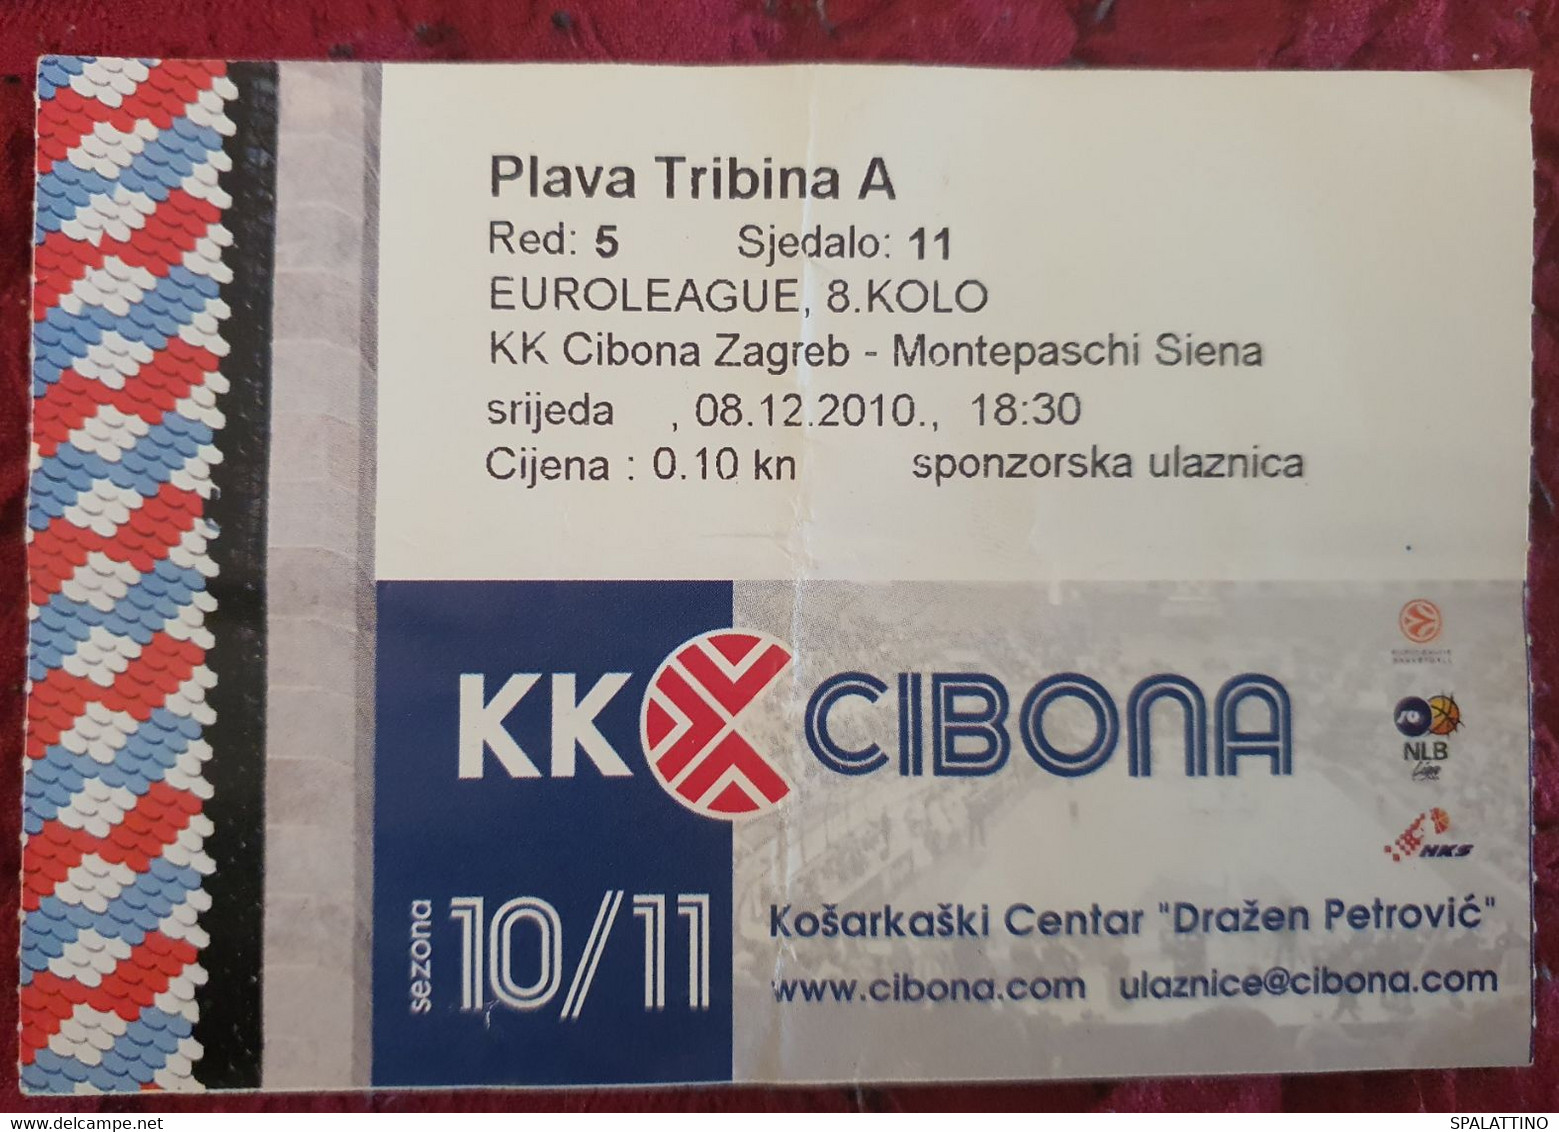 KK CIBONA- MONTEPASCHI SIENA, EUROLEAGUE 10/11 MATCH TICKET - Apparel, Souvenirs & Other